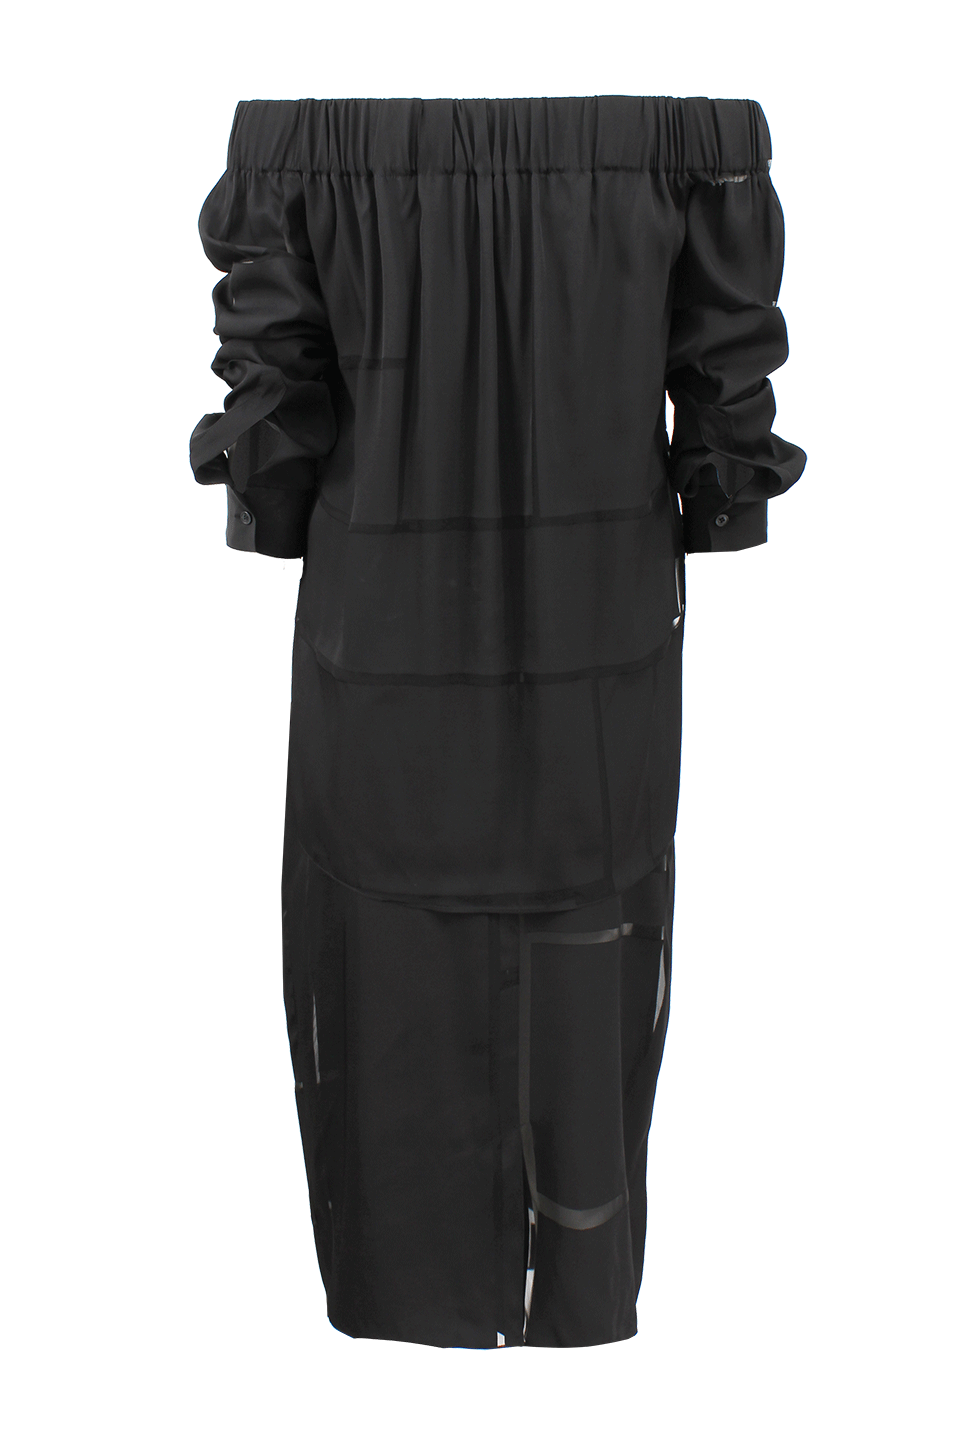 Long Sleeve Off Shoulder Dress CLOTHINGDRESSCASUAL STELLA MCCARTNEY   